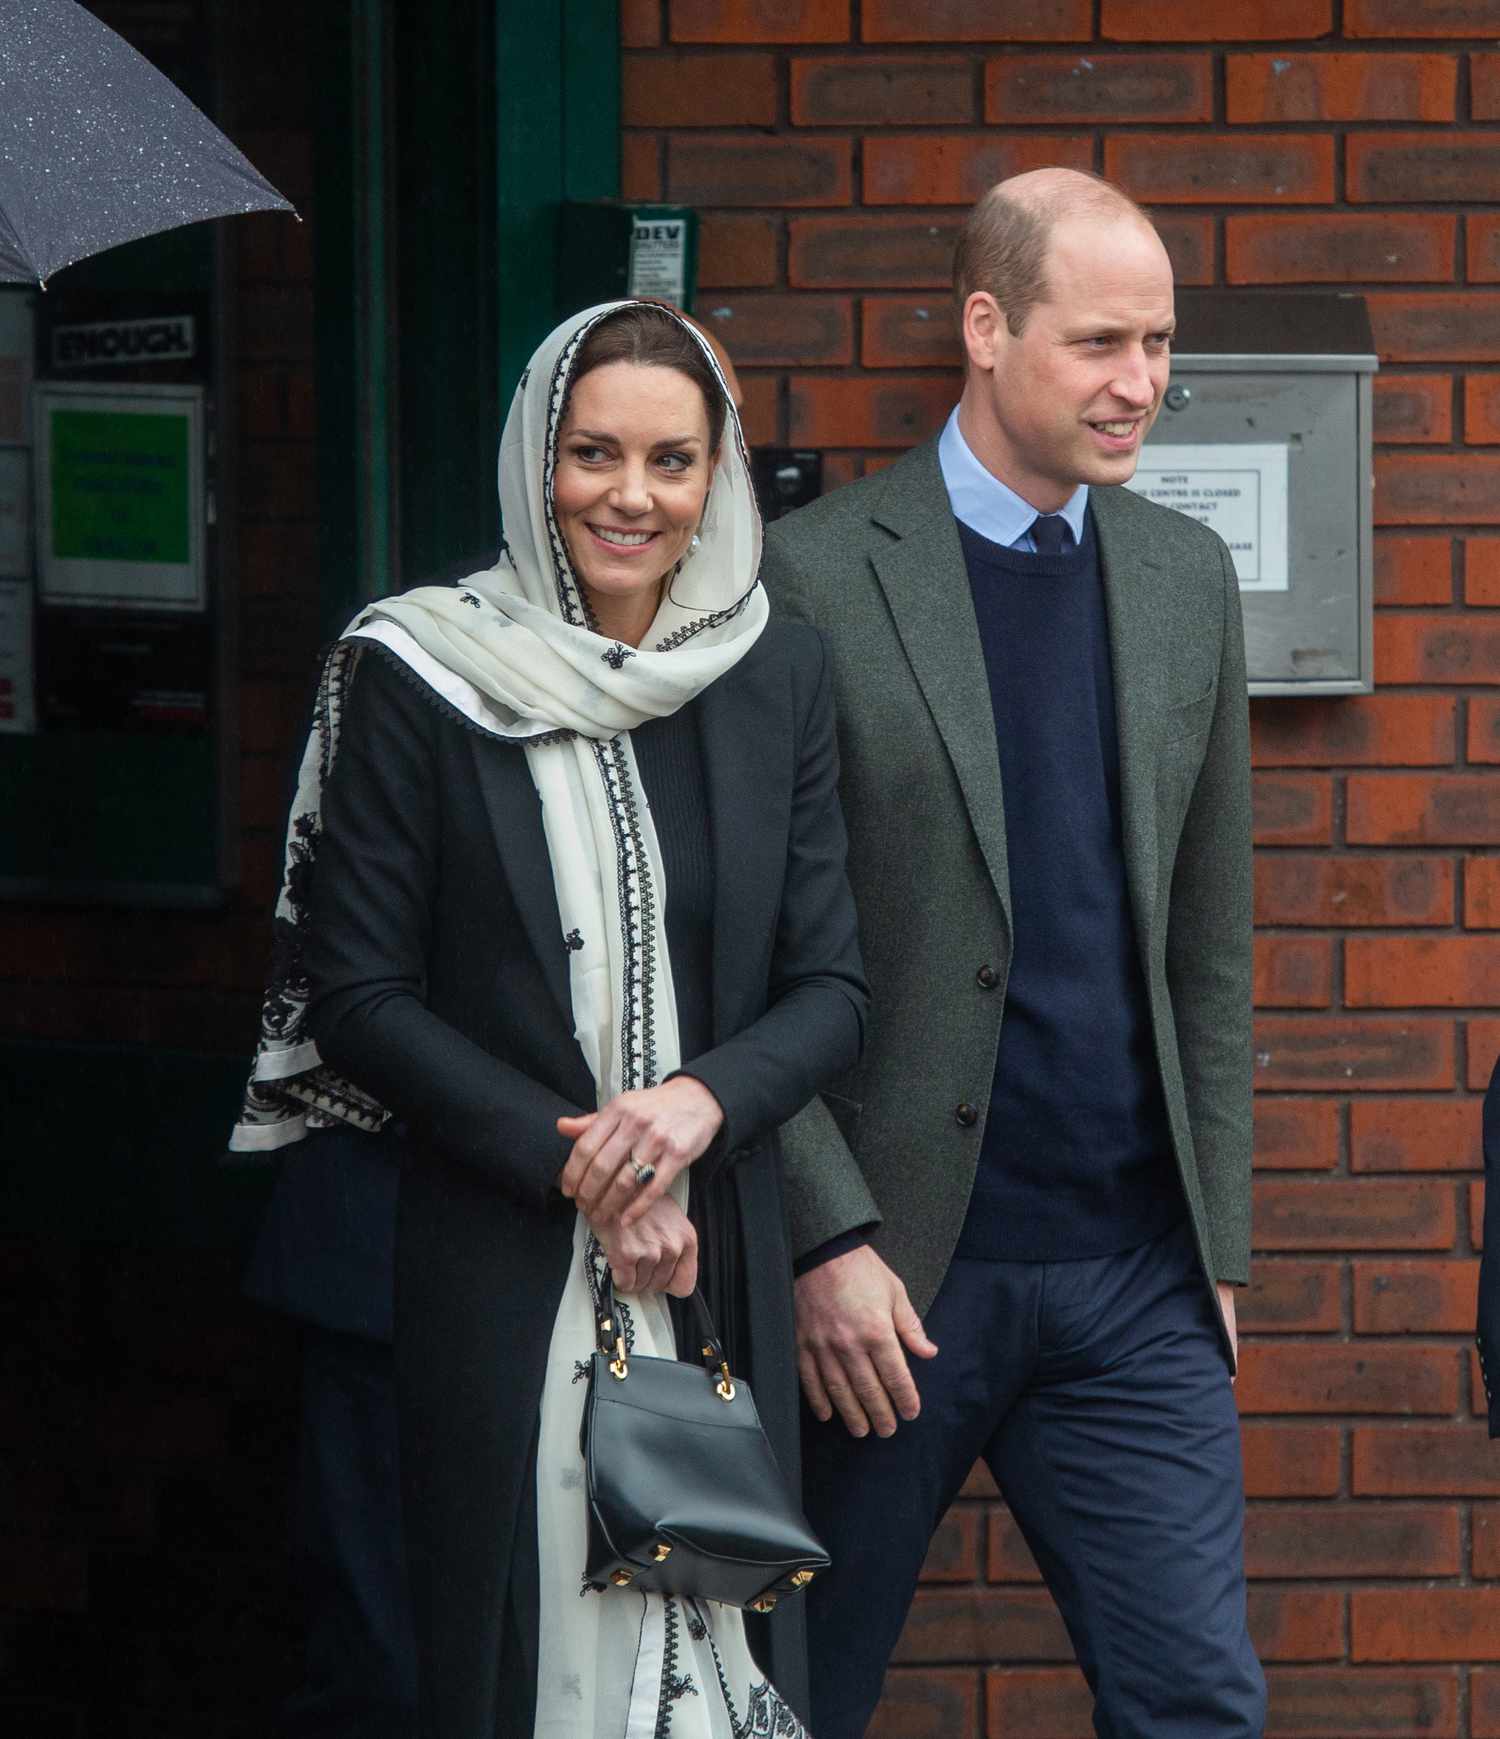 Kate Middleton i princ William u Islamskom centru